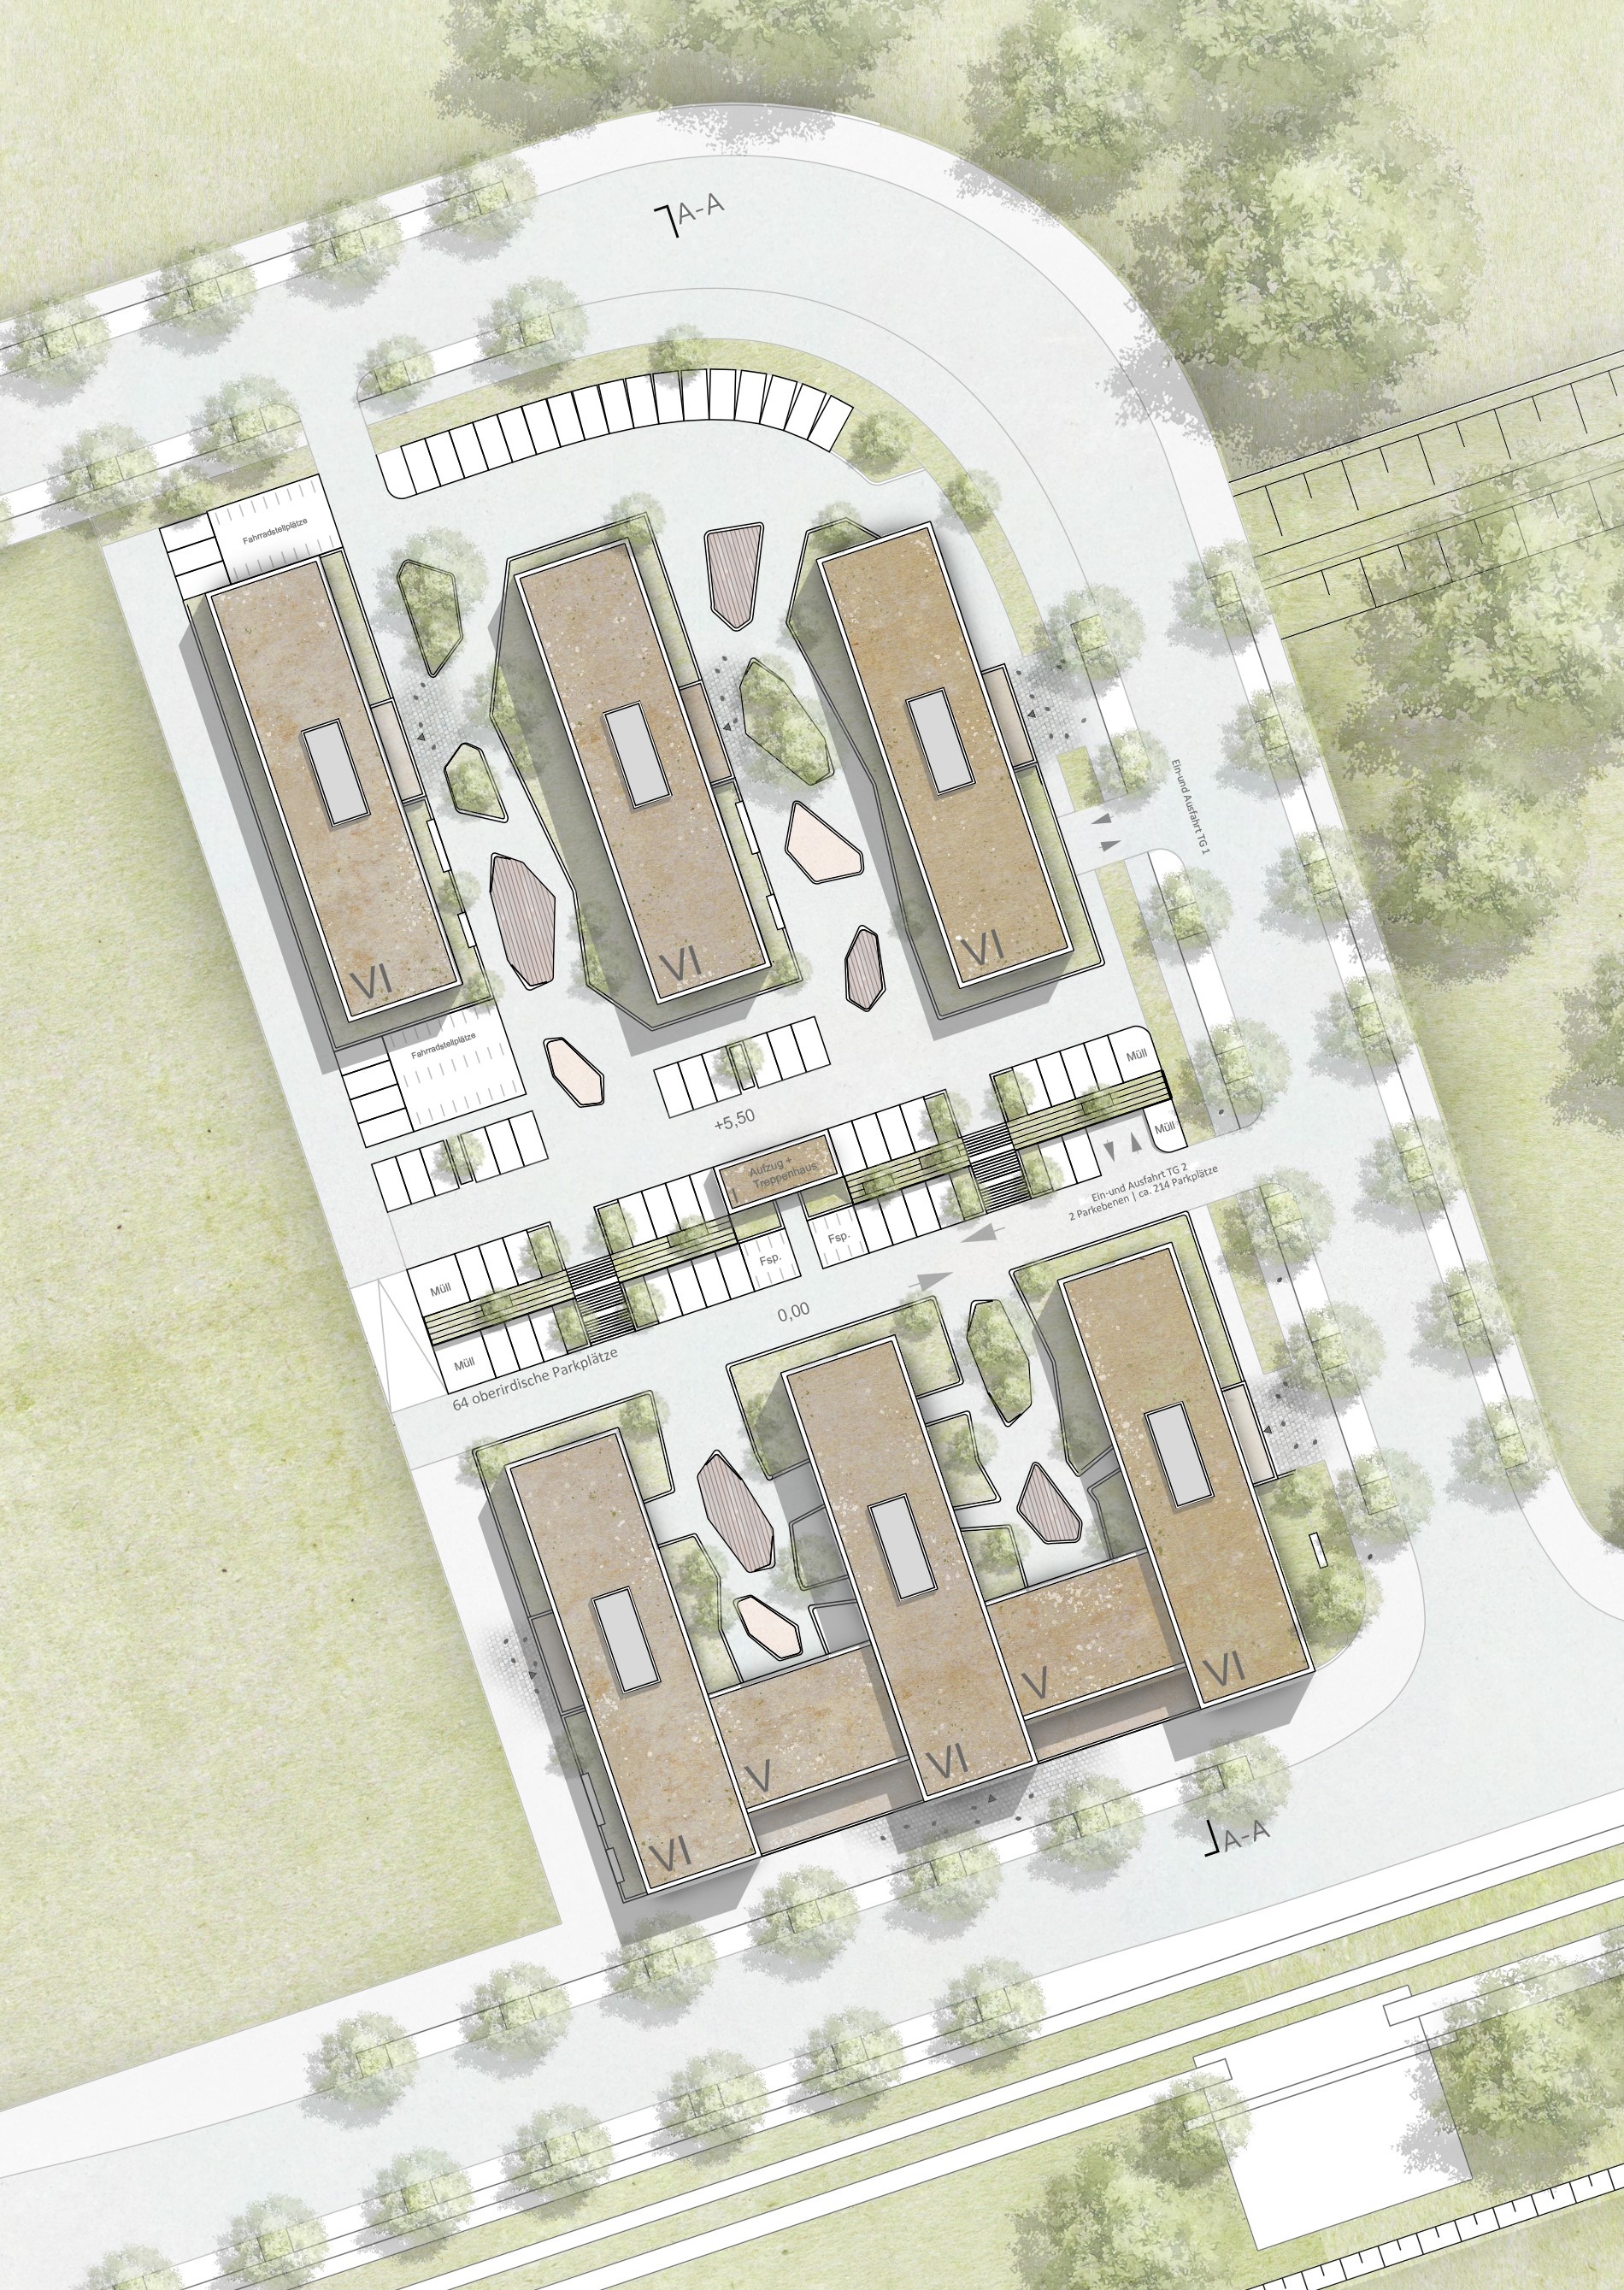 Juli 2021 - Neubau in Bochum bietet 17.000 m² Mietfläche